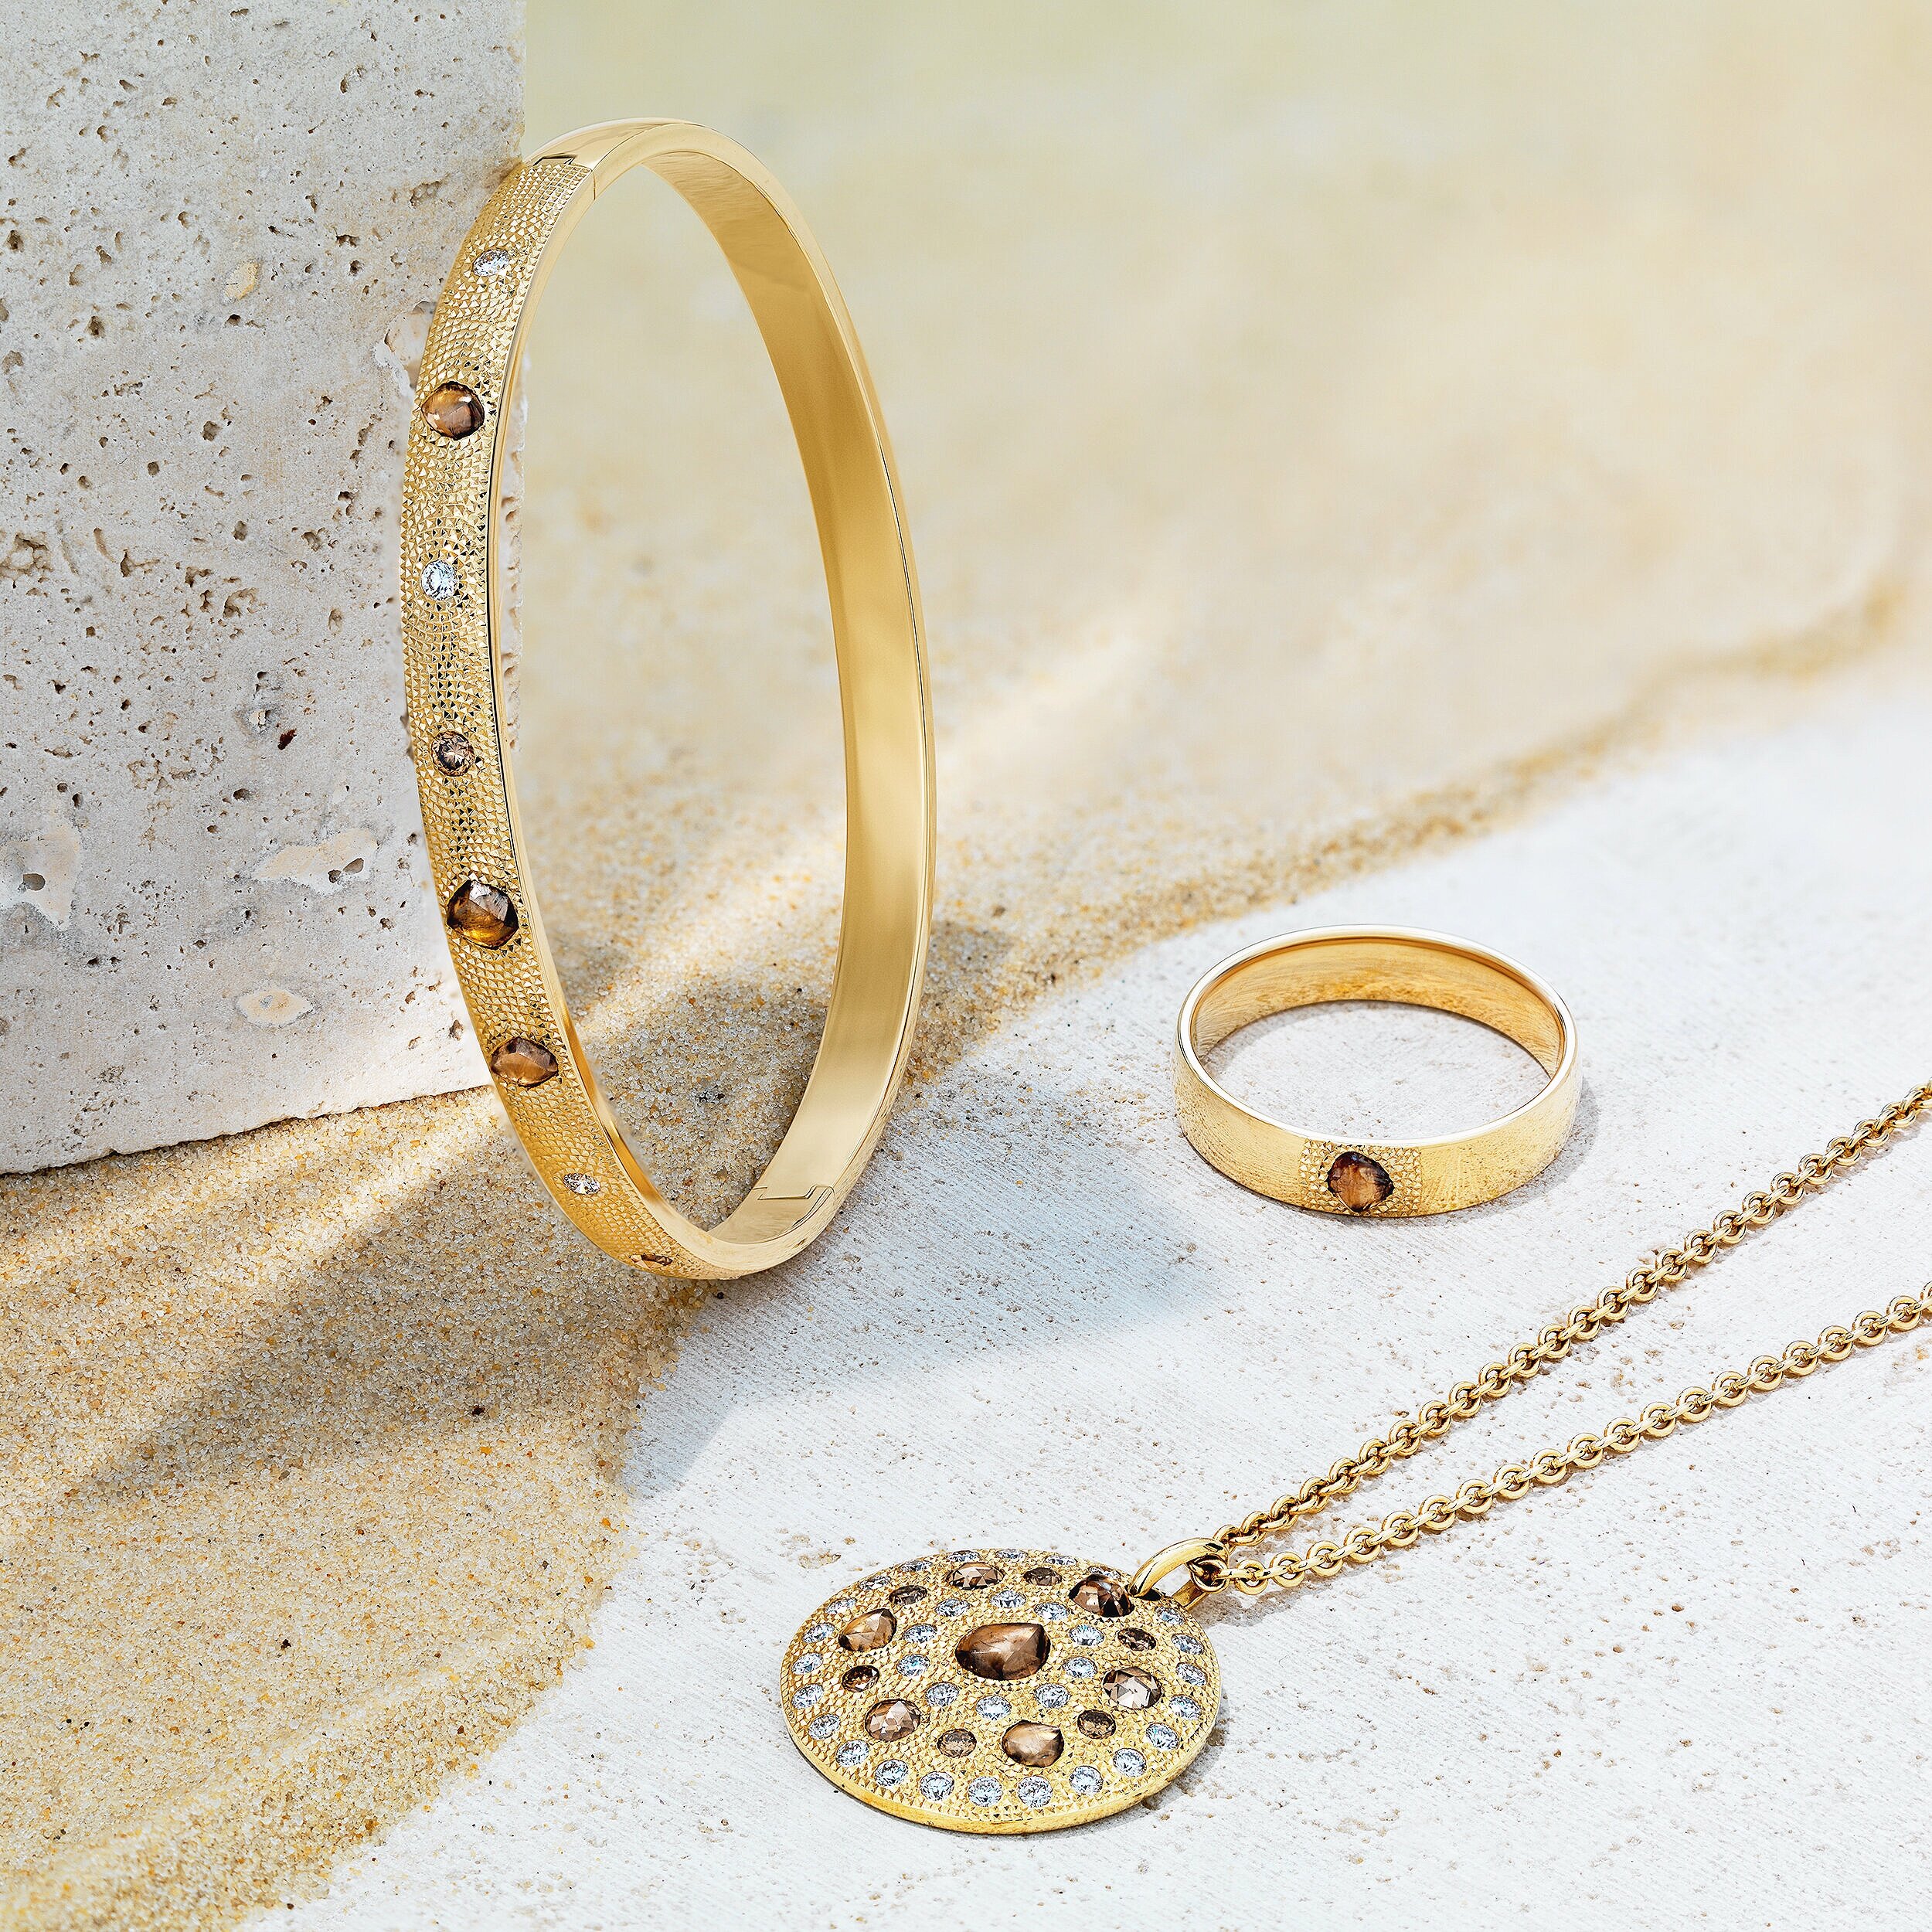  Talisman diamond ring, pendant and bracelet shot for De Beers 